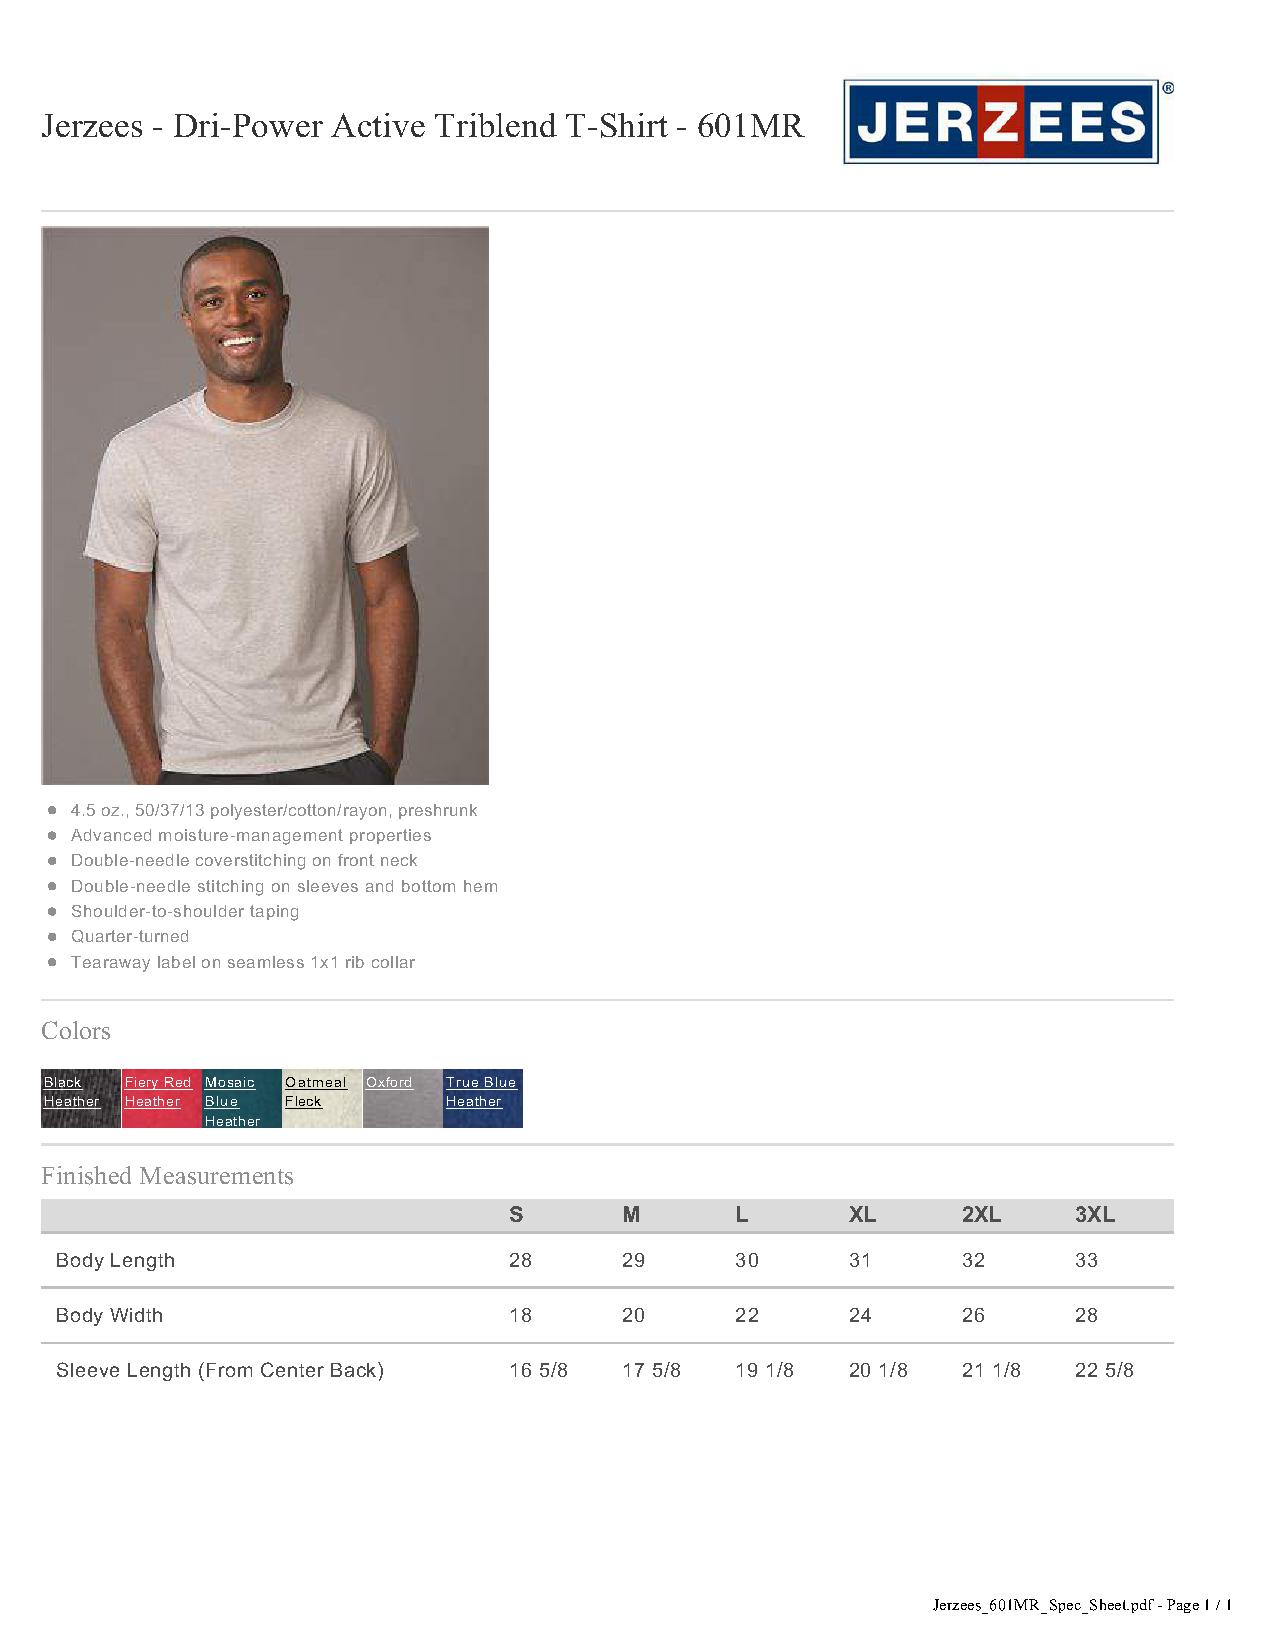 Jerzees 601MR - Dri-Power Active Triblend T-Shirt $3.74 - Men's T-Shirts